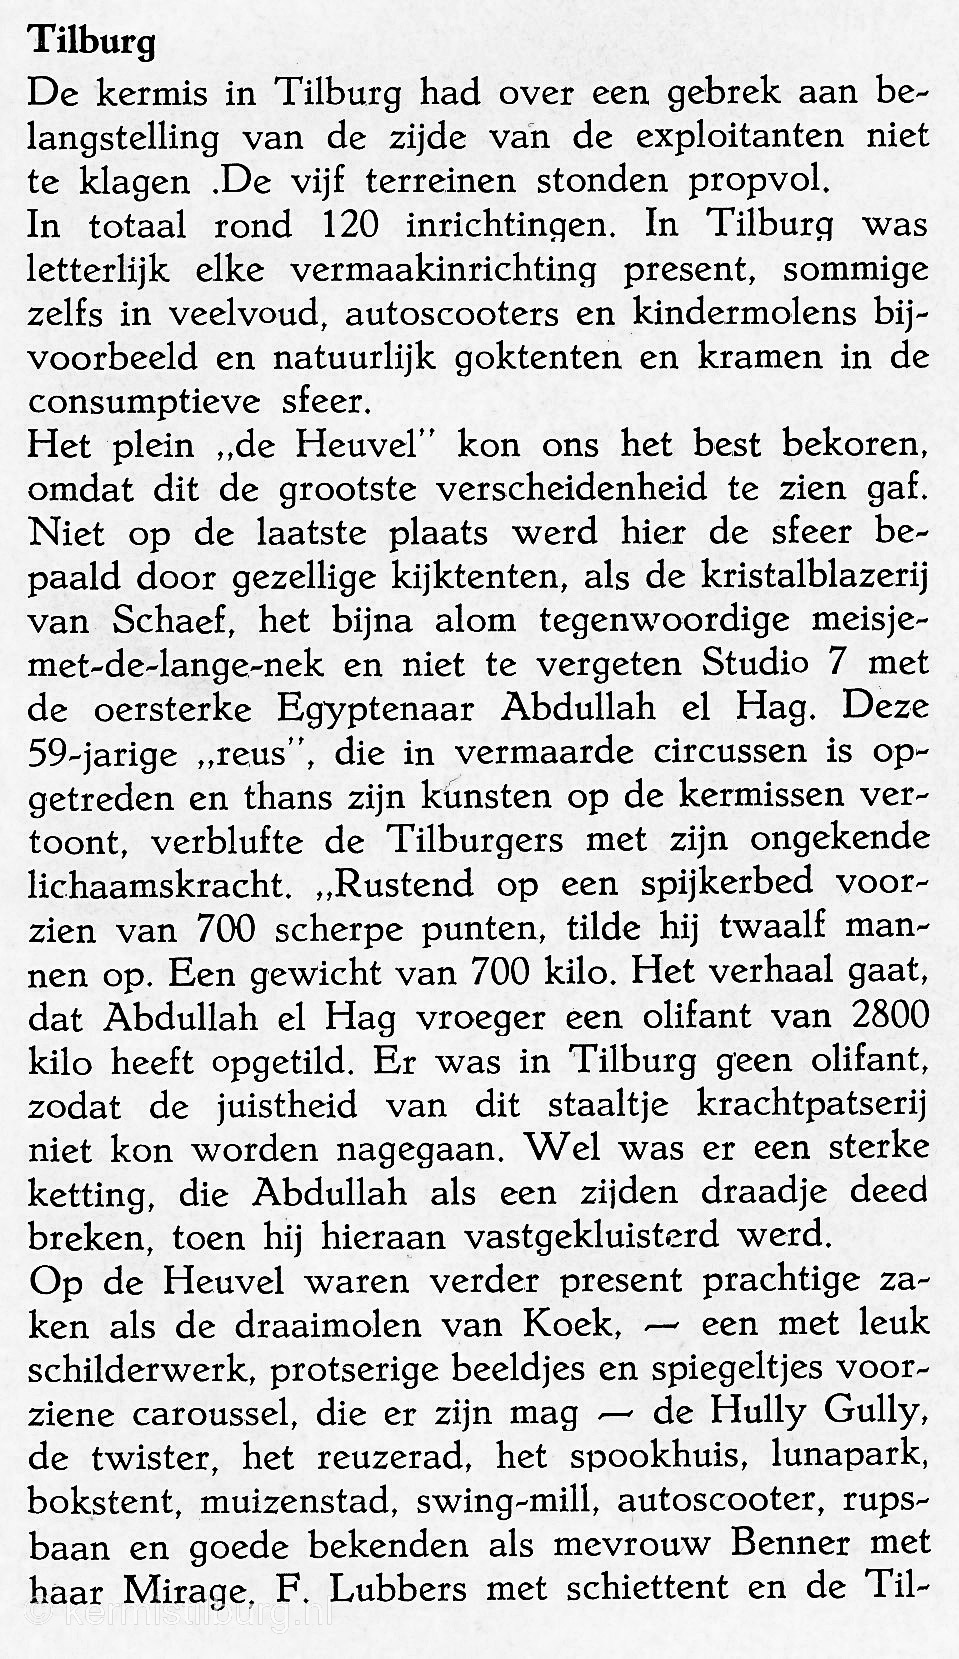 1969, Kermis, Tilburg, Tilburgse kermis